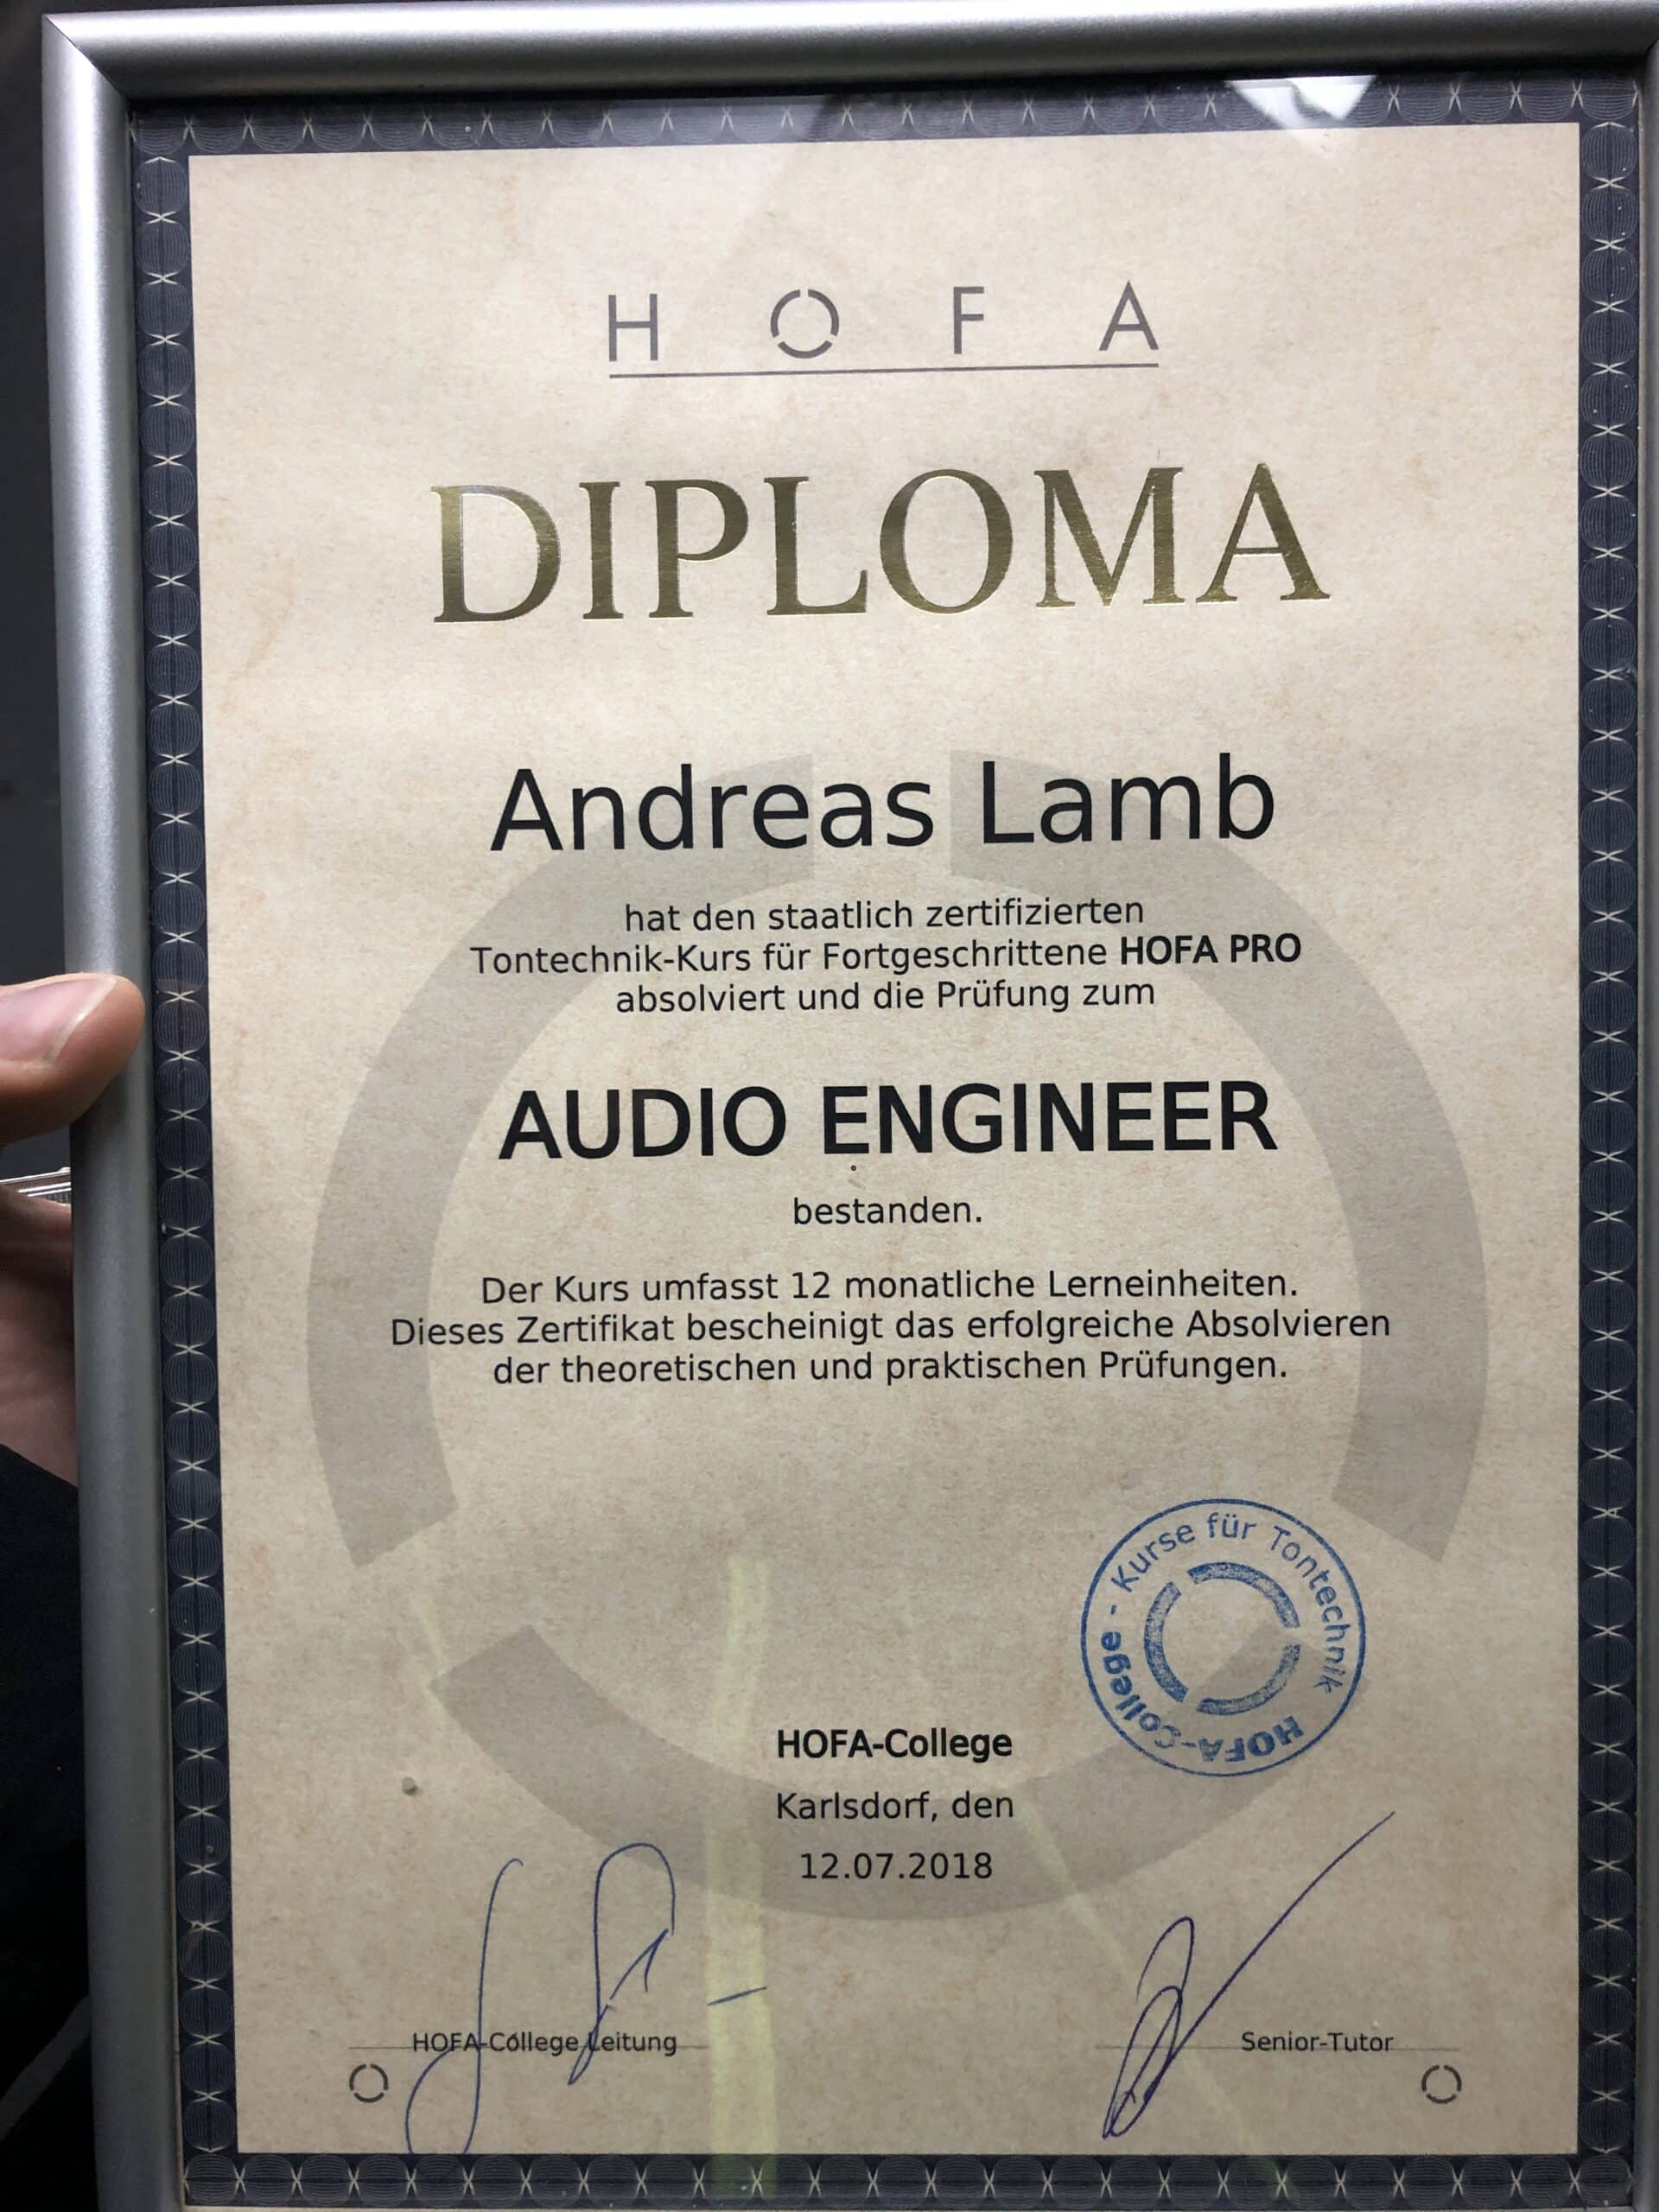 Diplom Audio Engineer - Andreas Lamb